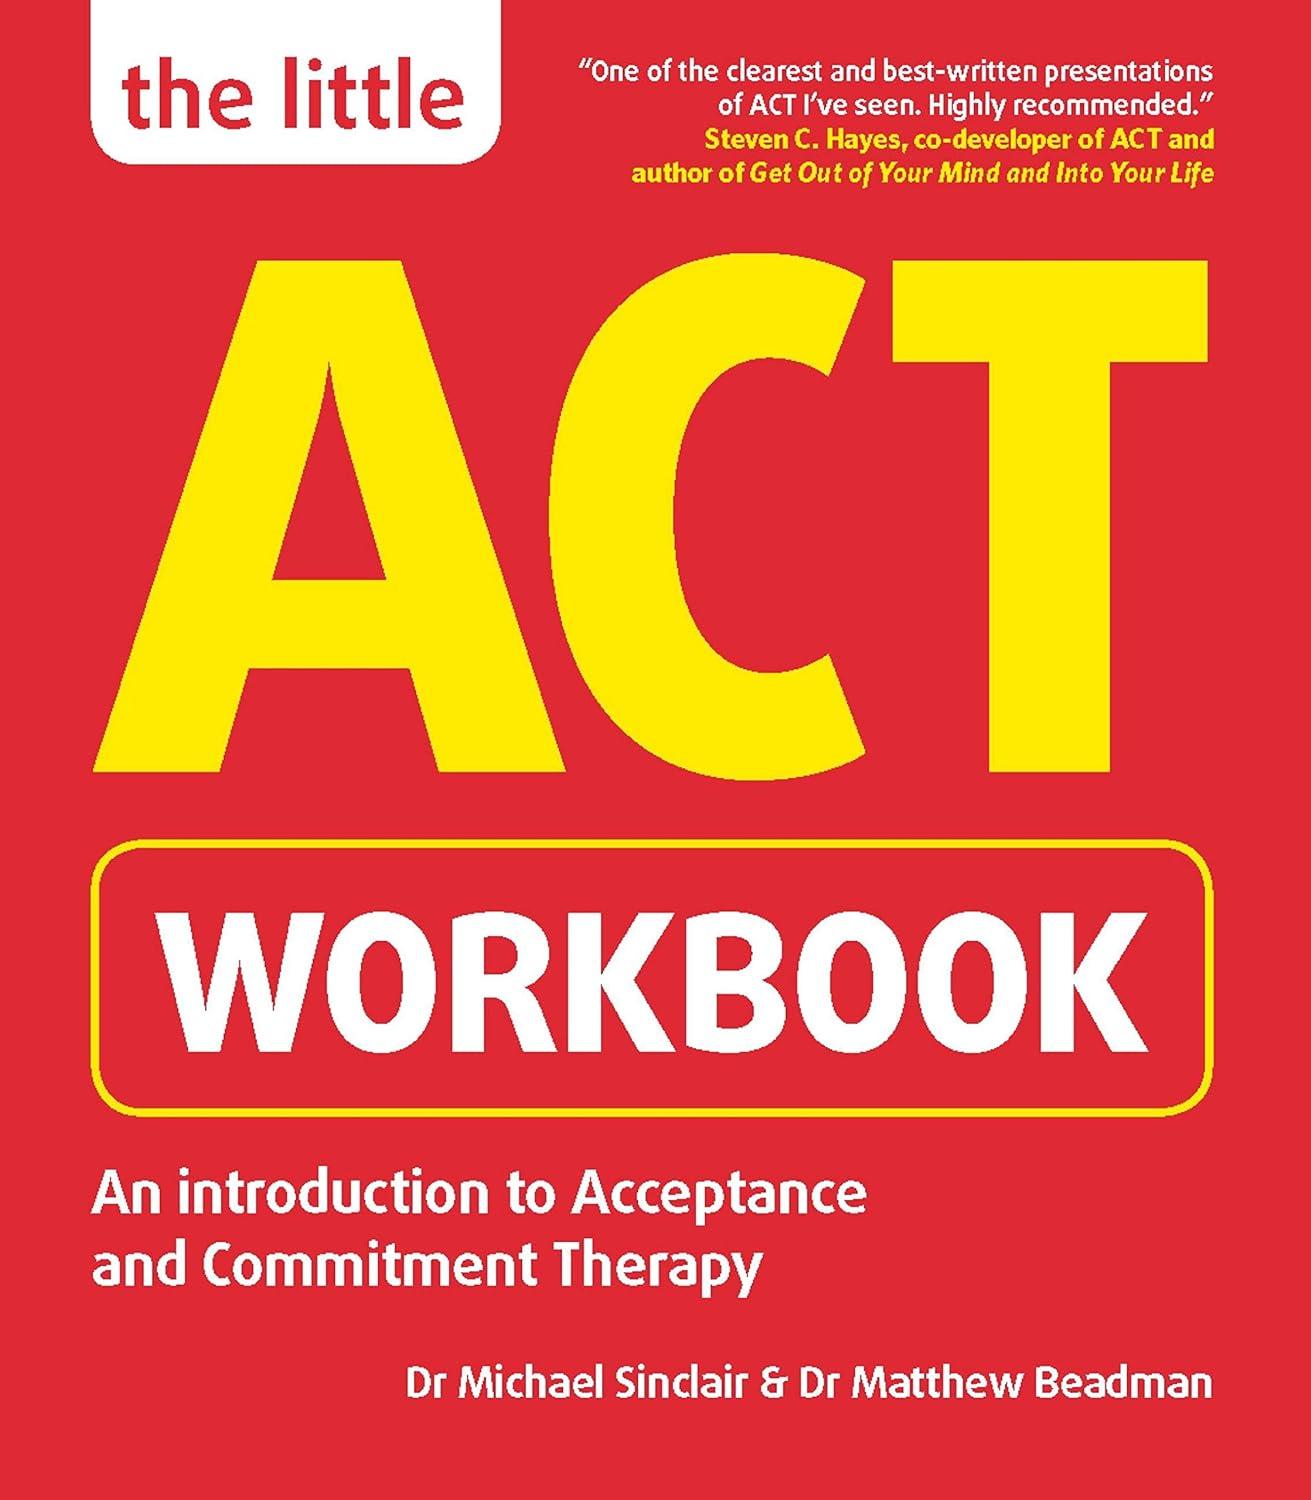 the little act workbook 1st edition dr michael sinclair, dr matthew beadman 1780592434, 978-1780592435